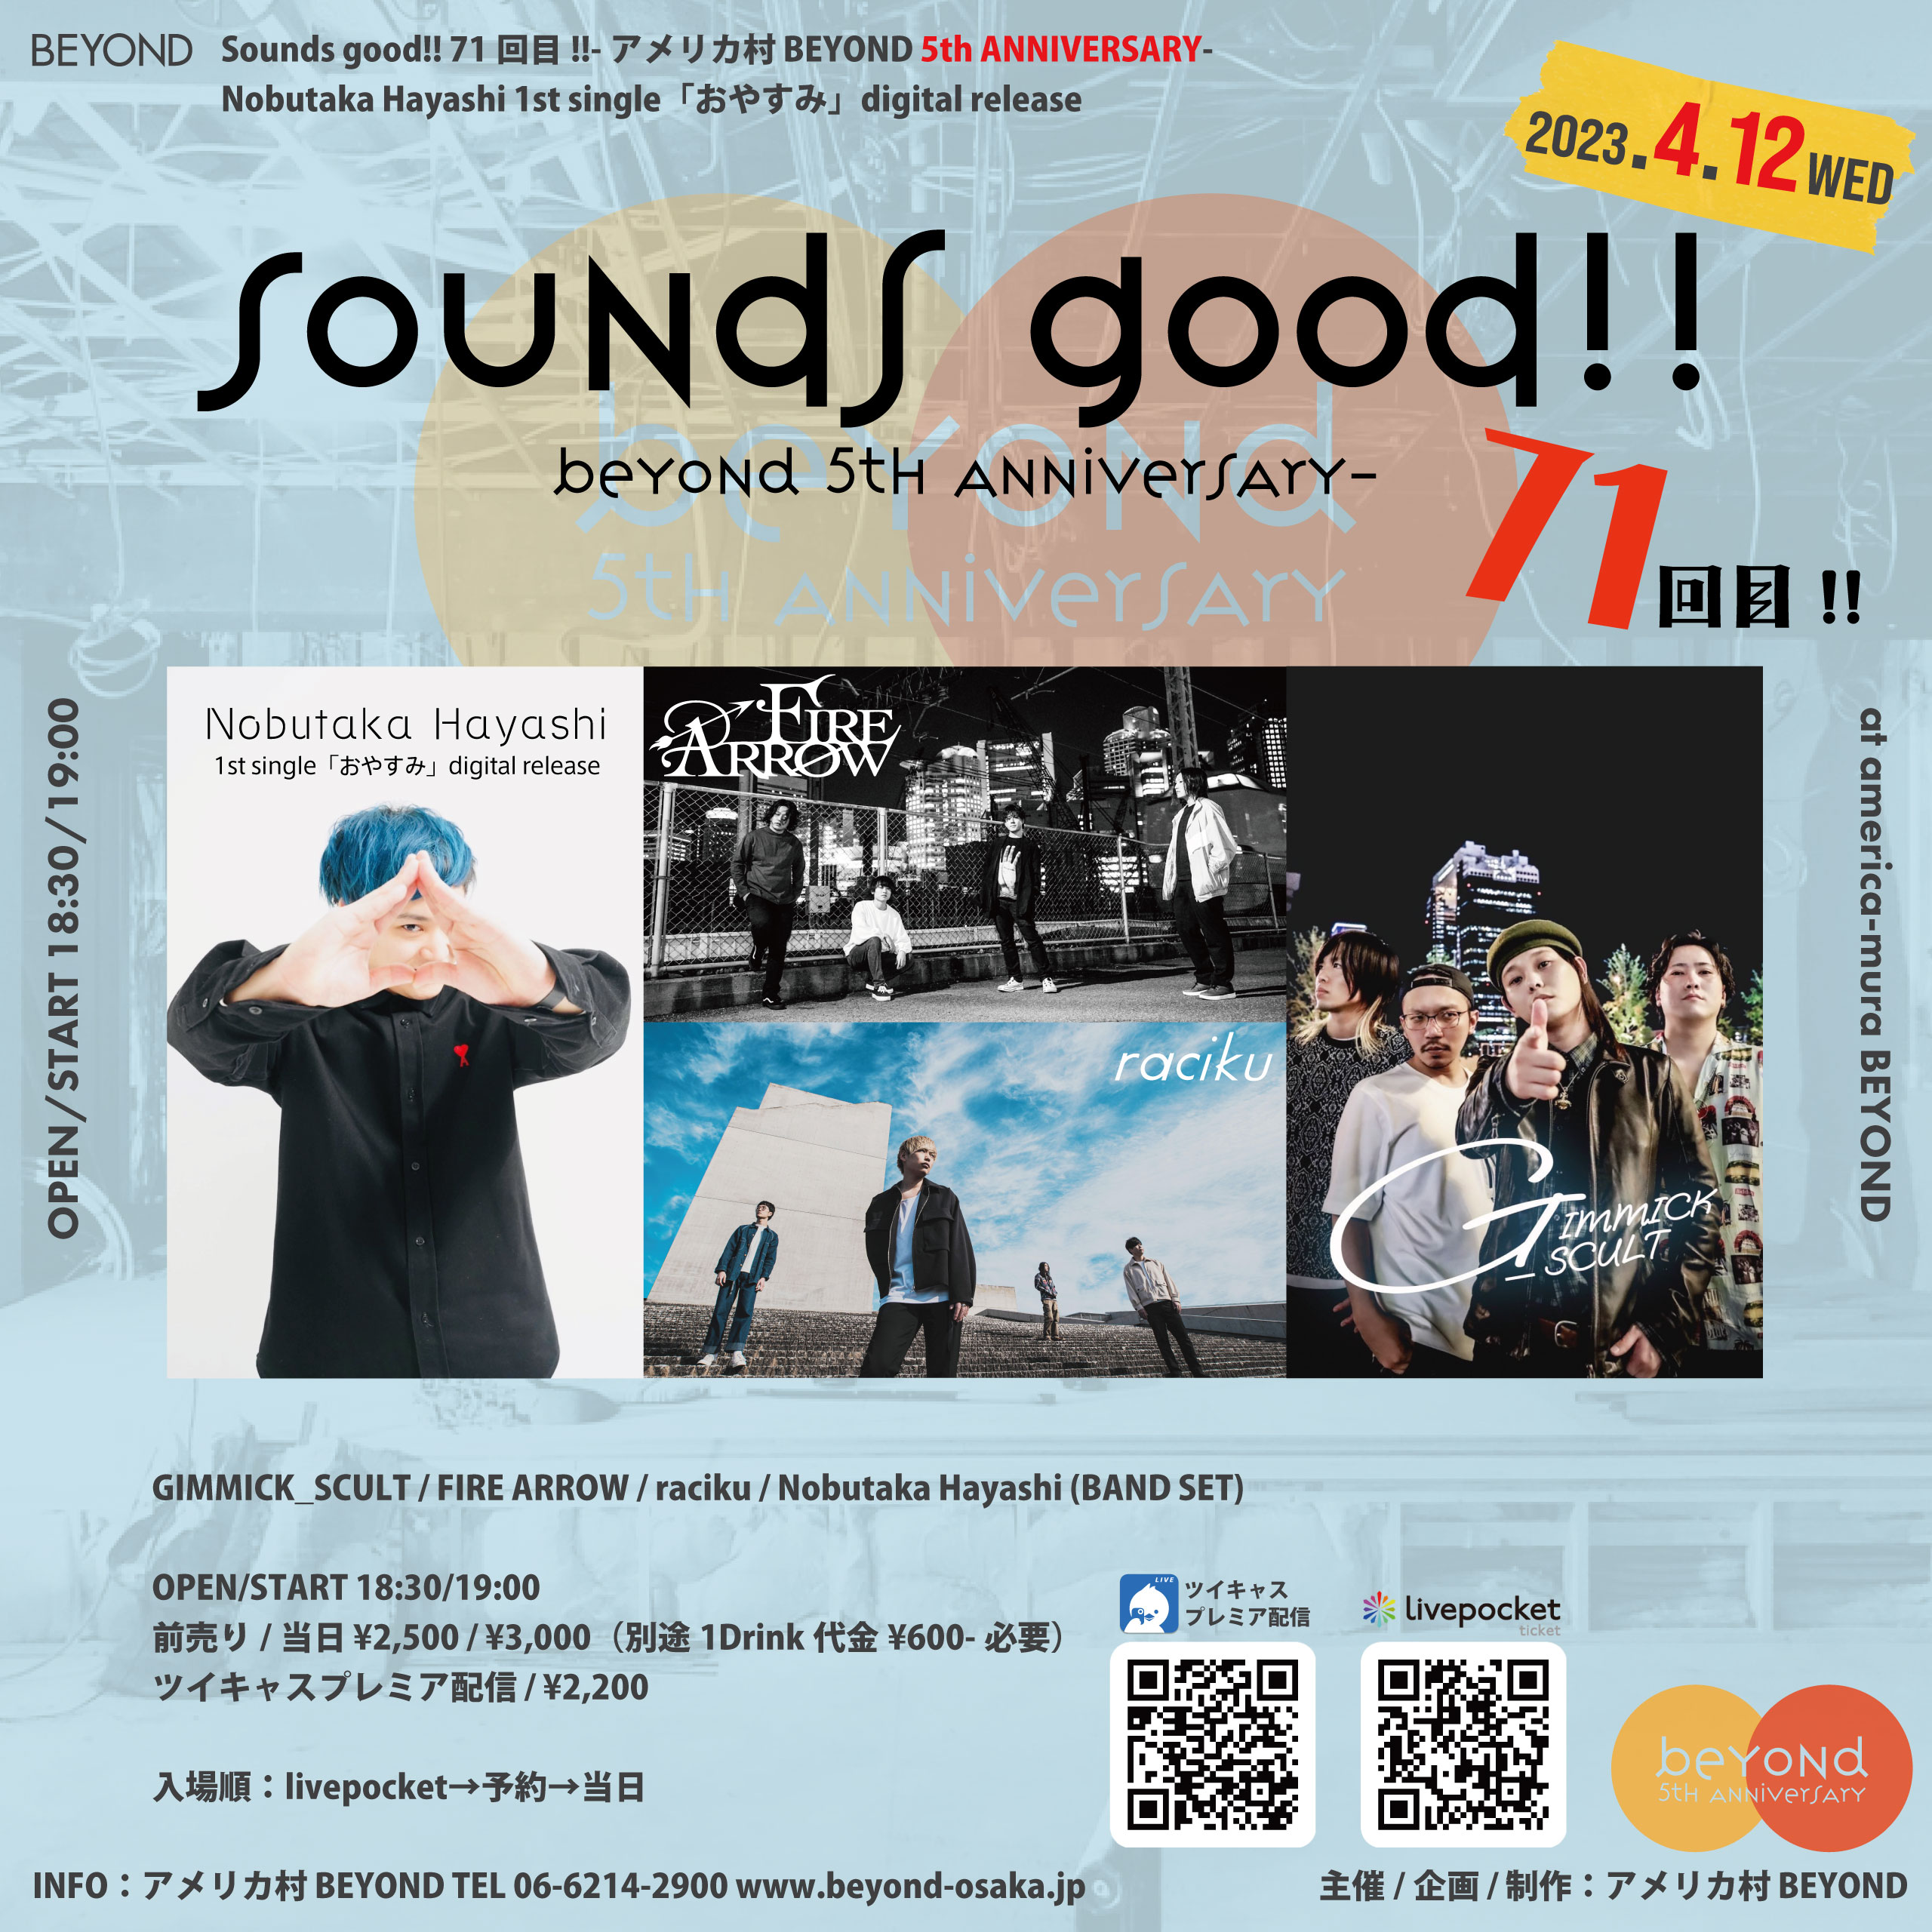 Sounds good!! 71回目!! -アメリカ村 BEYOND 5th ANNIVERSARY- Nobutaka Hayashi 1st single「おやすみ」digital release